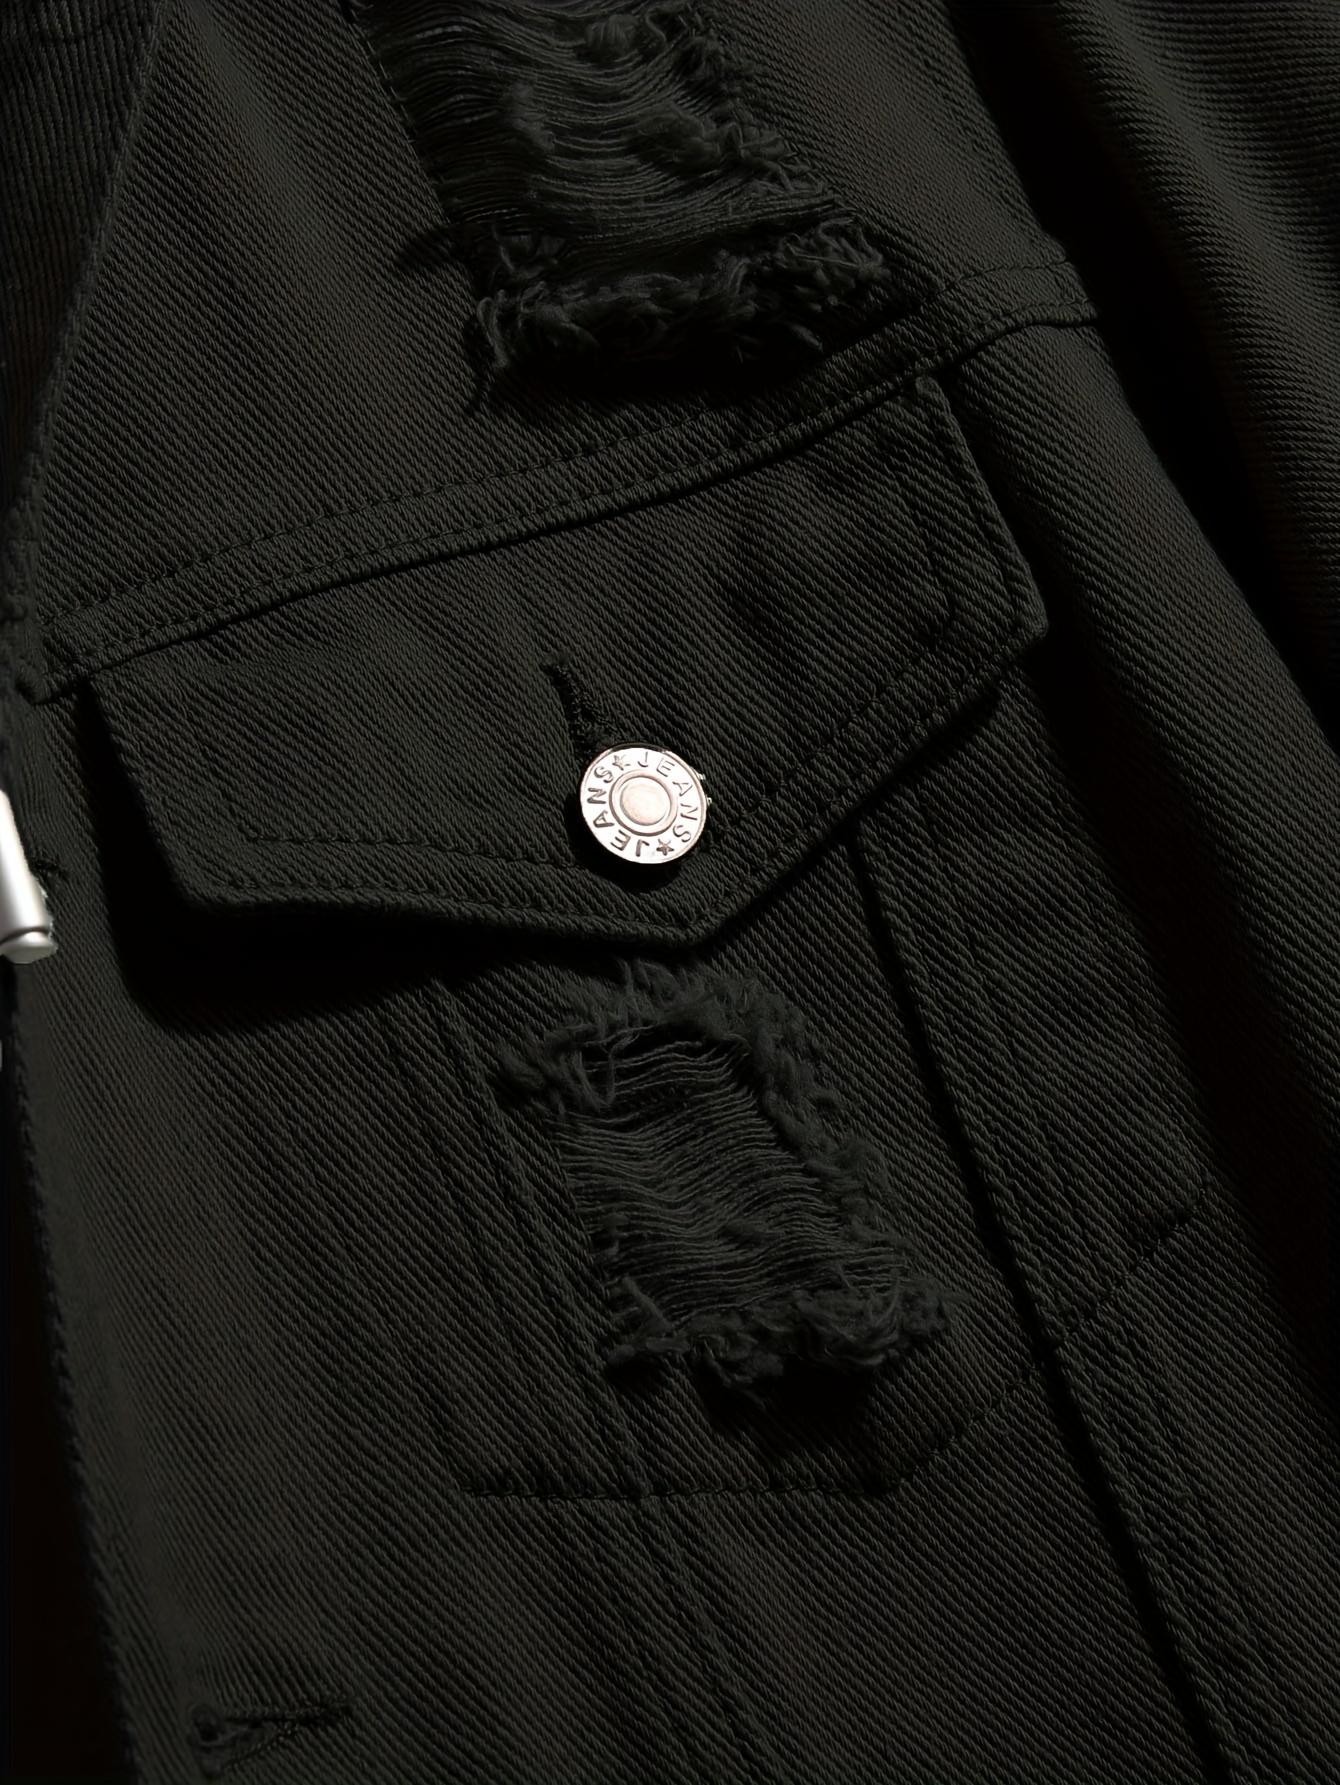 New Men's Button Down Denim Jacket Jacket Gifts - Temu